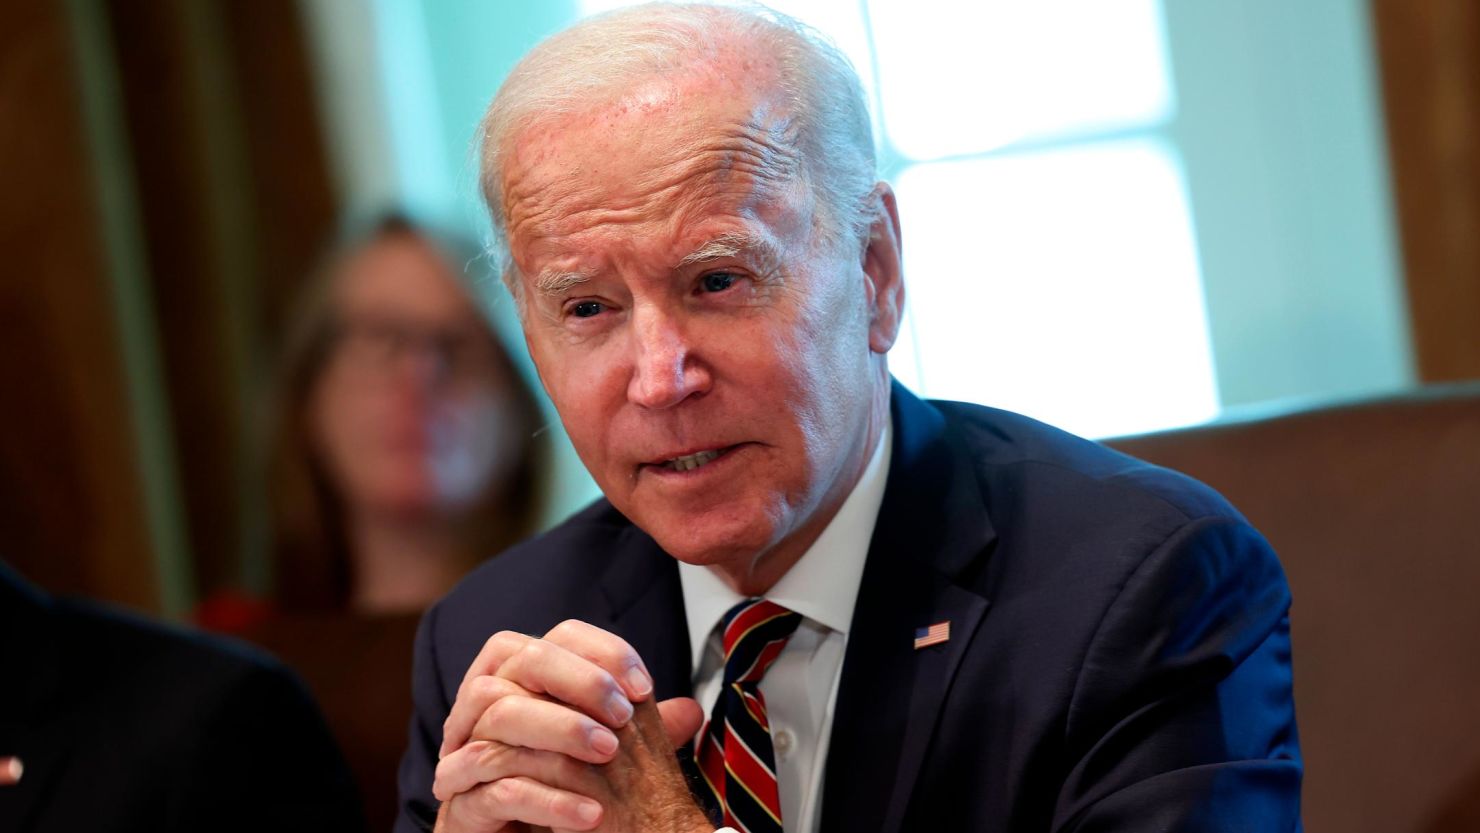 Joe Biden quits the race - Paper Talk 